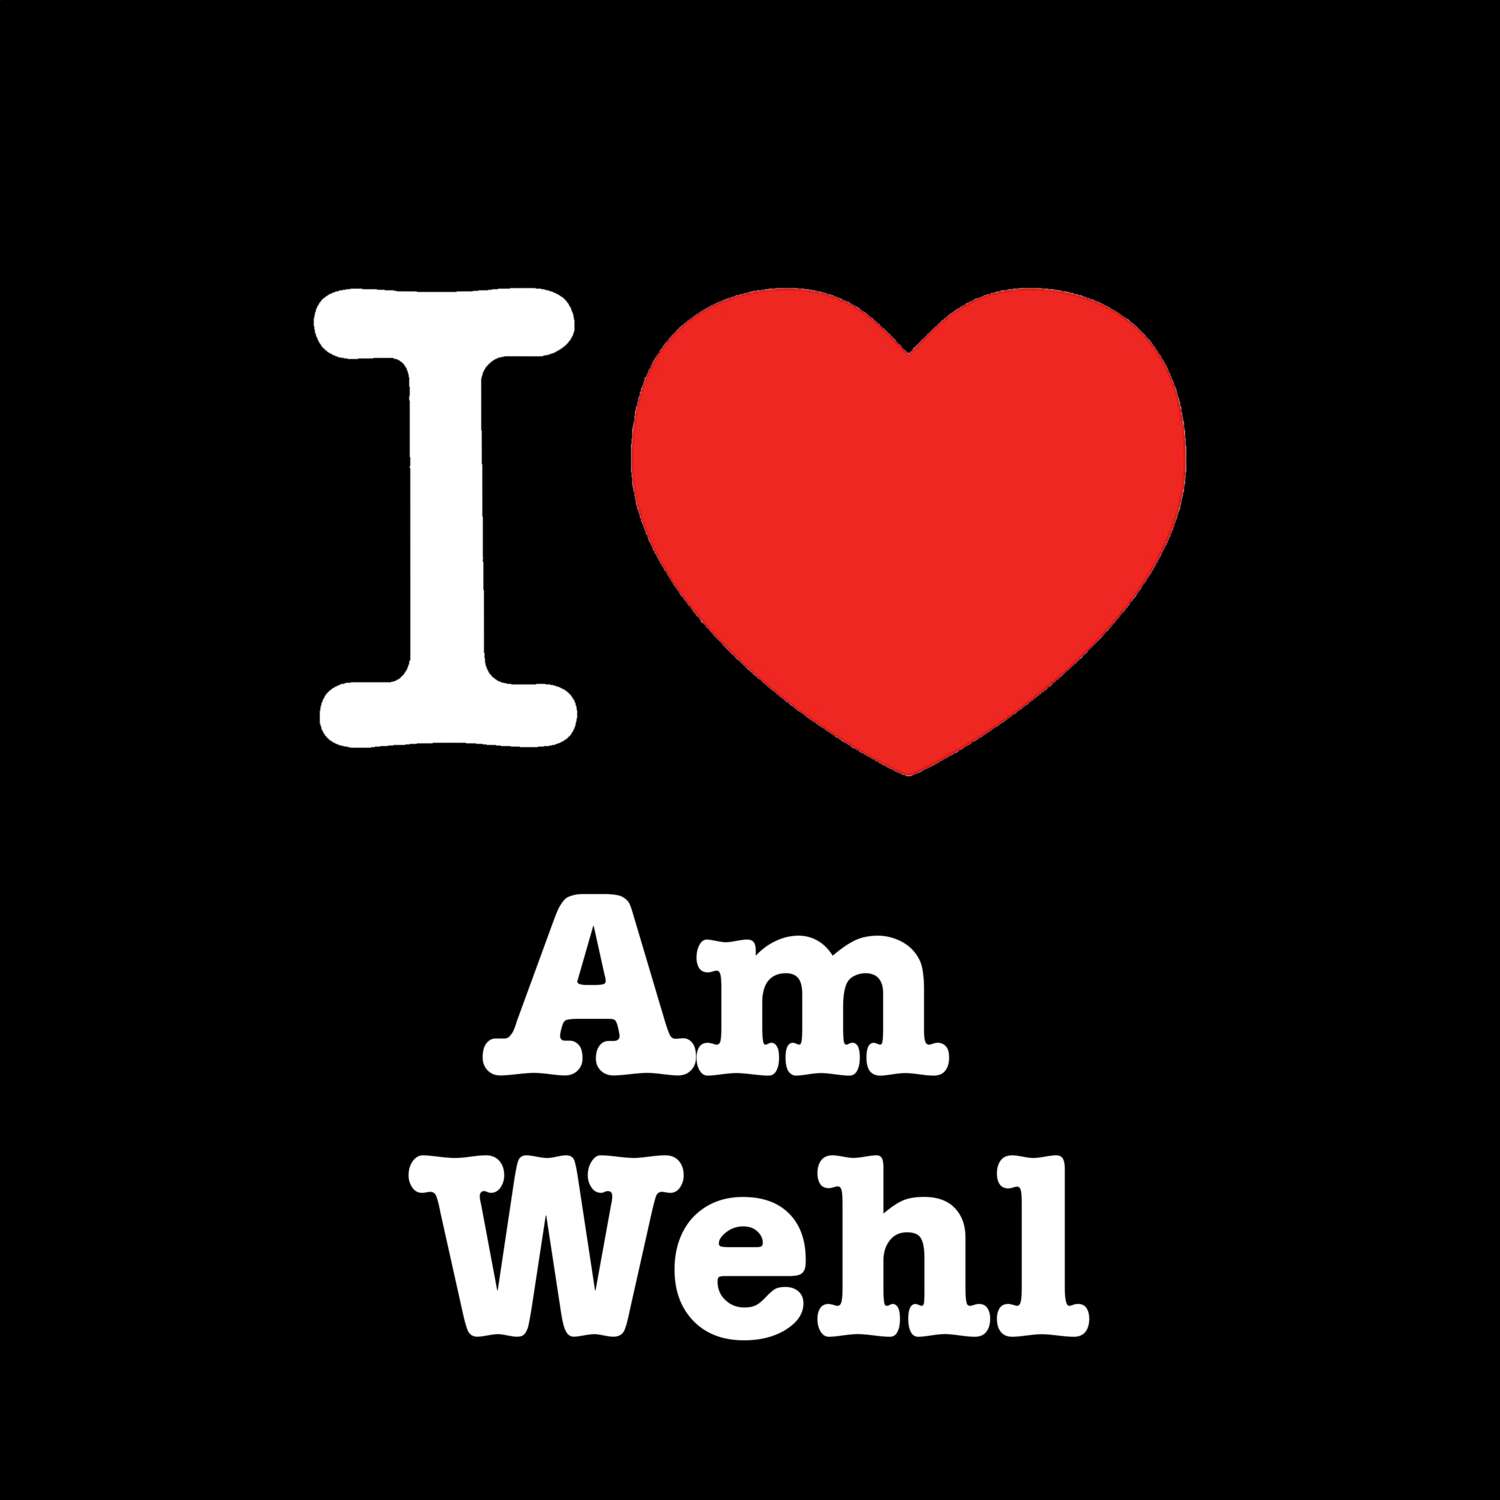 Am Wehl T-Shirt »I love«